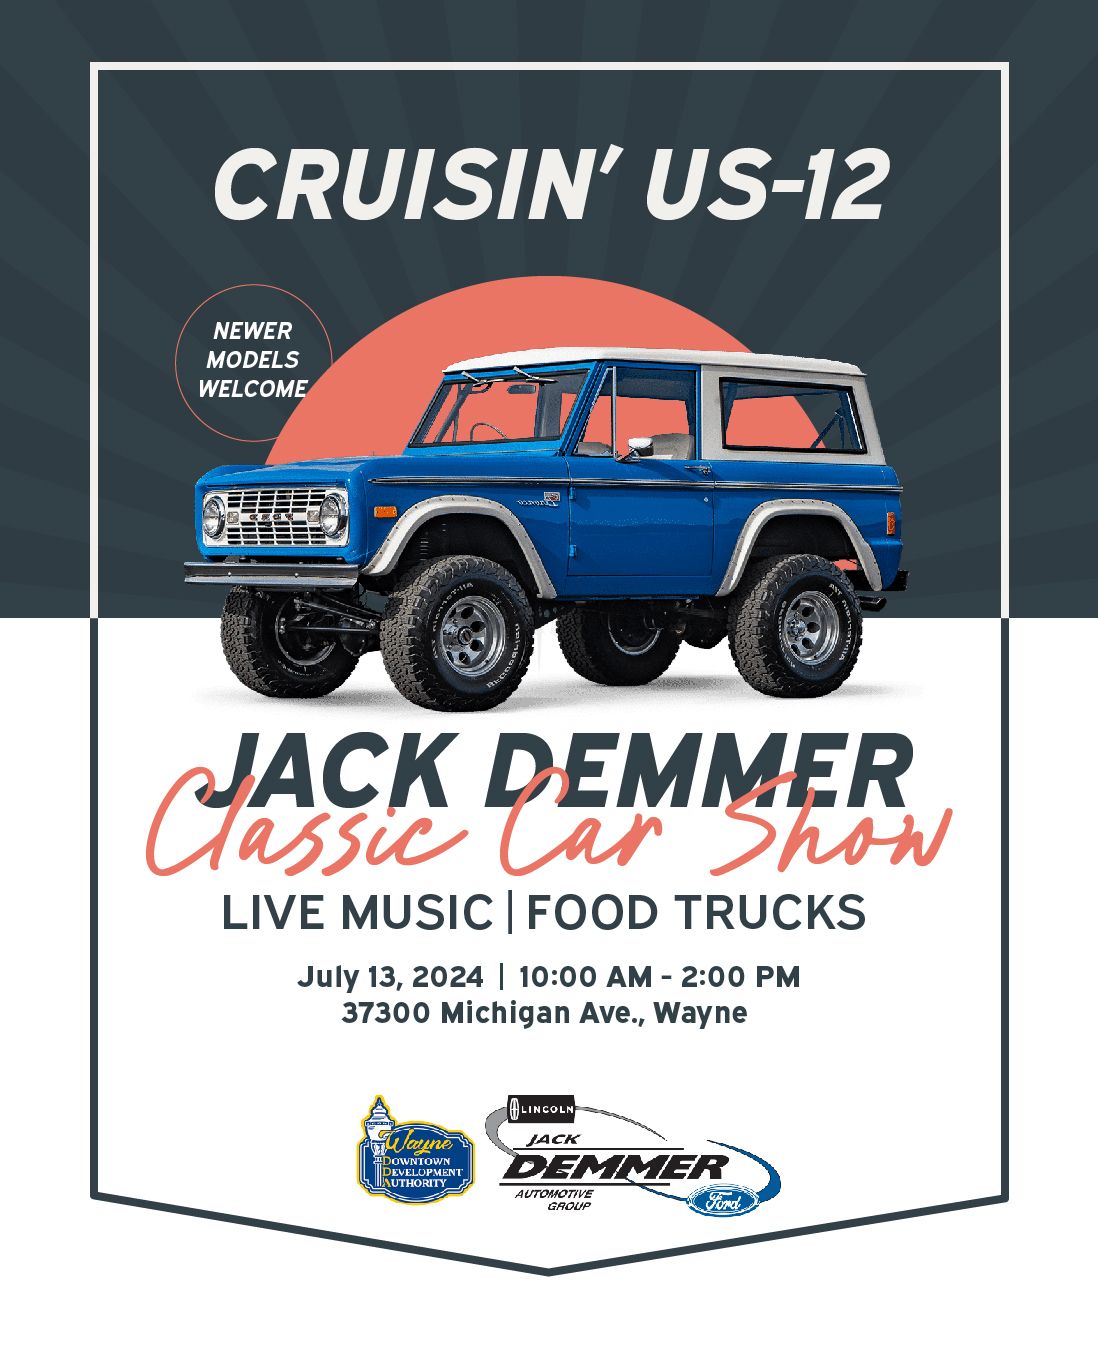 Jack Demmer Ford Car Show - Cruisin' US-12